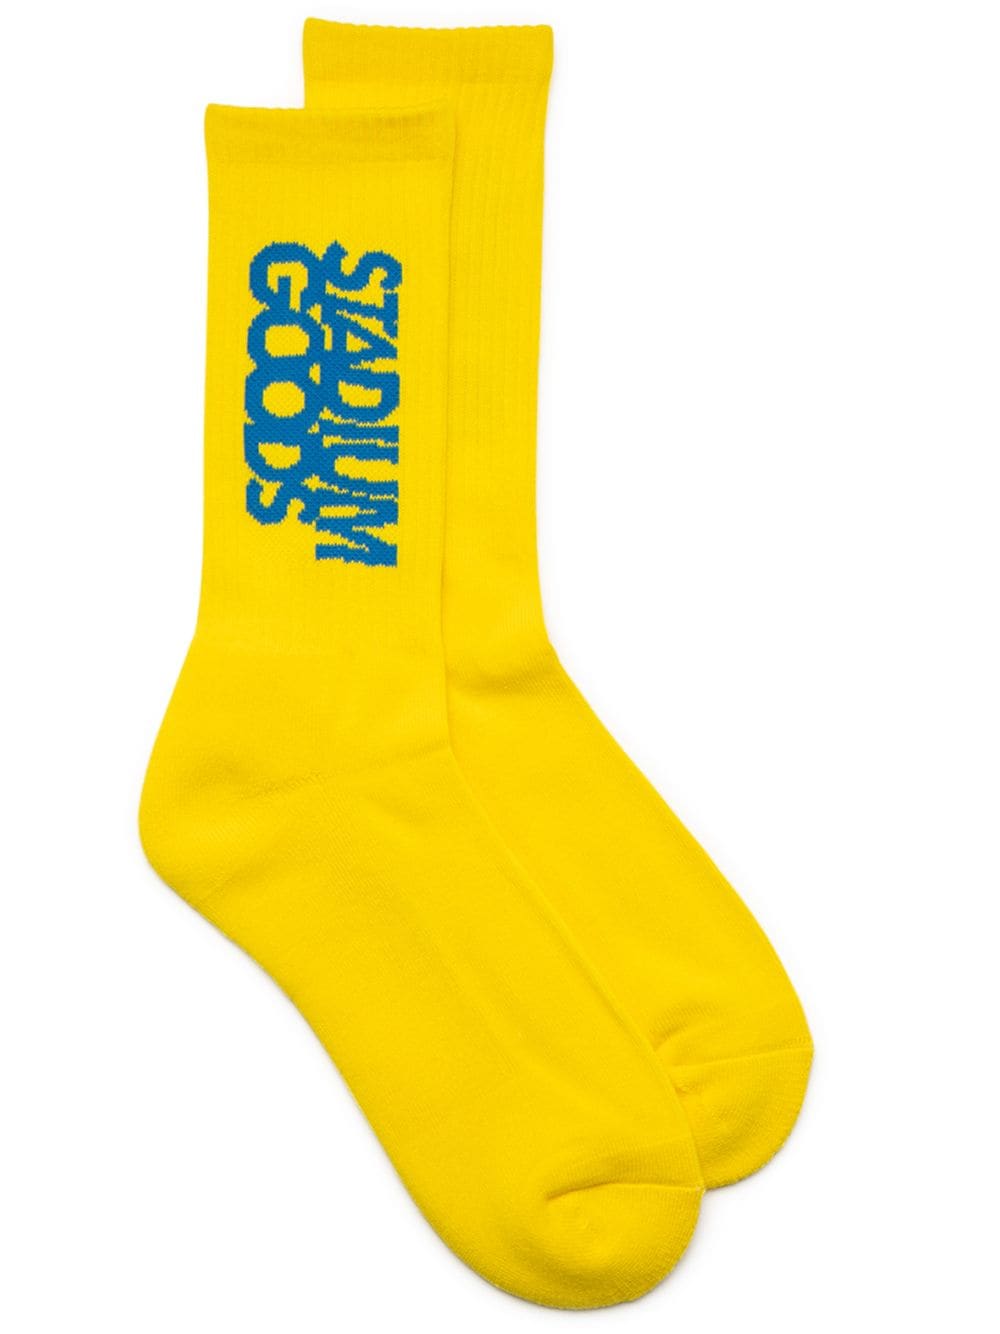 Stadium Goods Crew Length Socks In Yellow